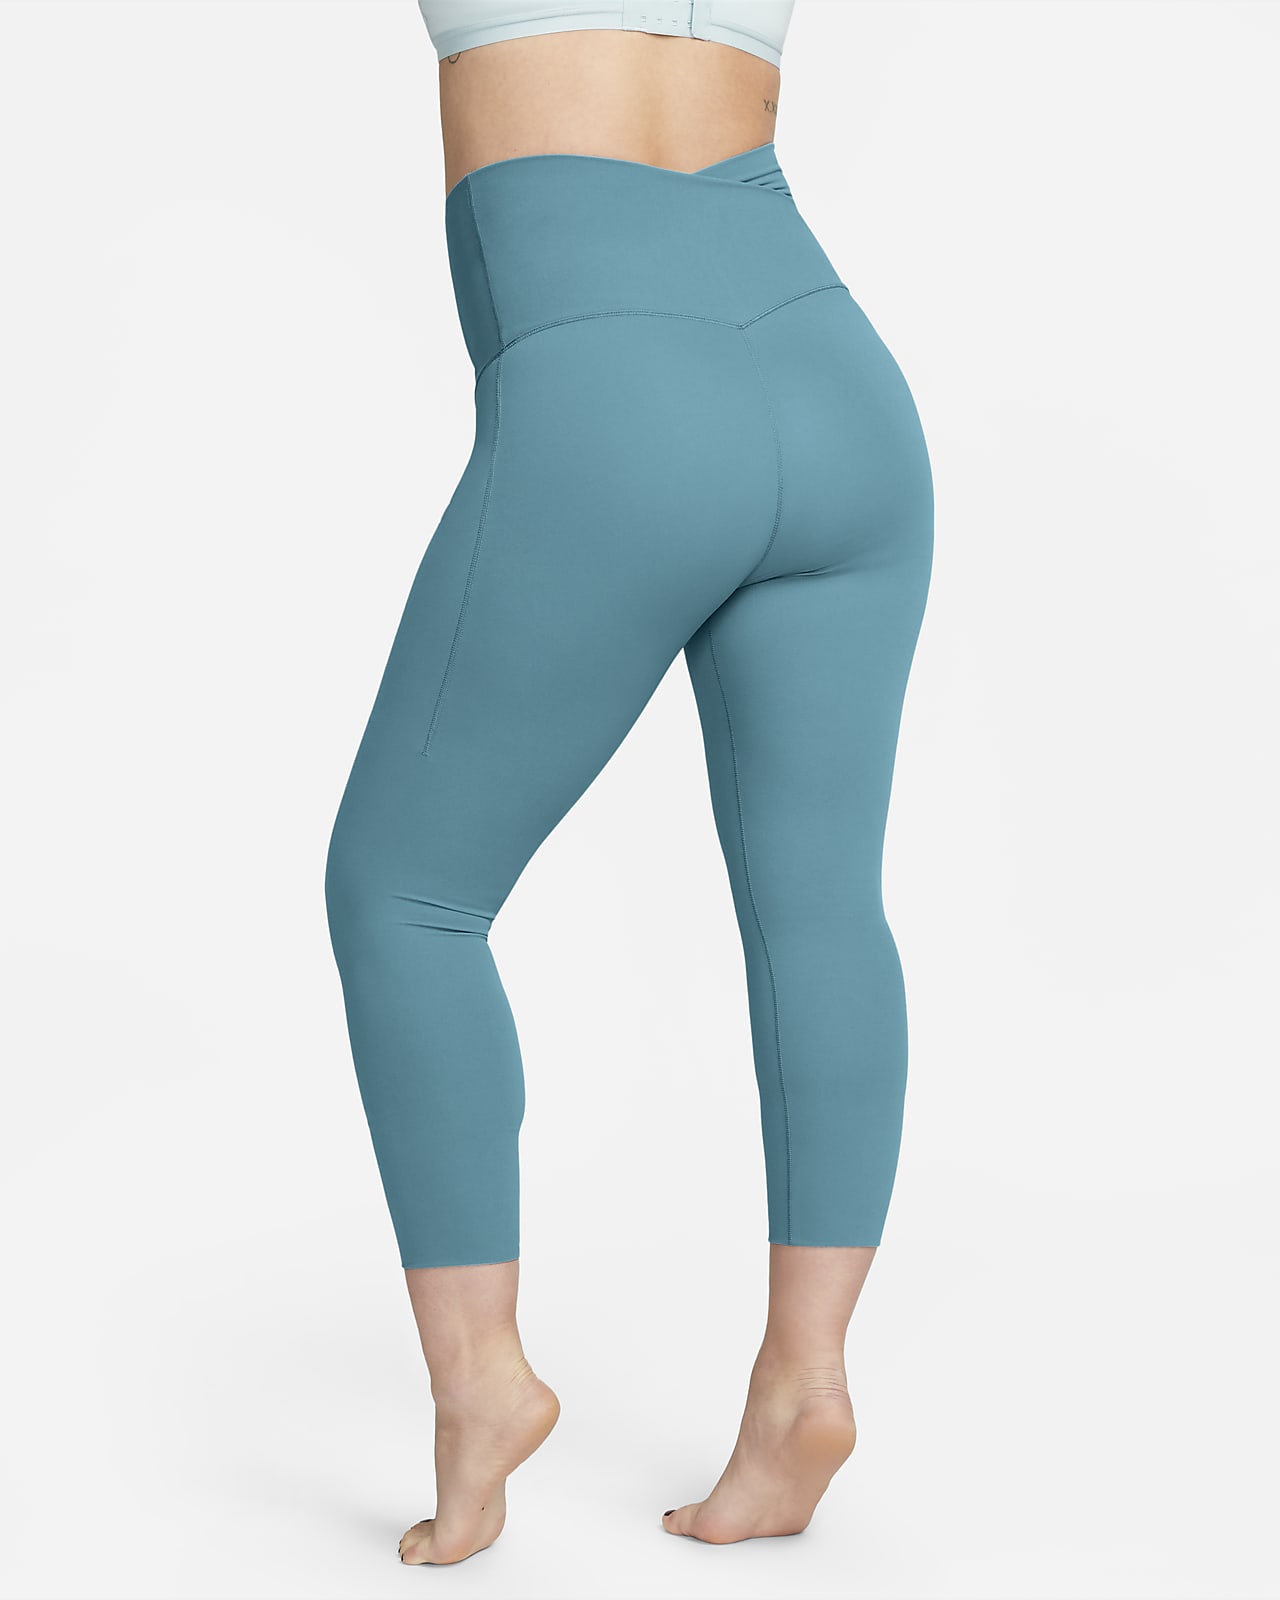 Zenvy Yoga Tops Underwear.